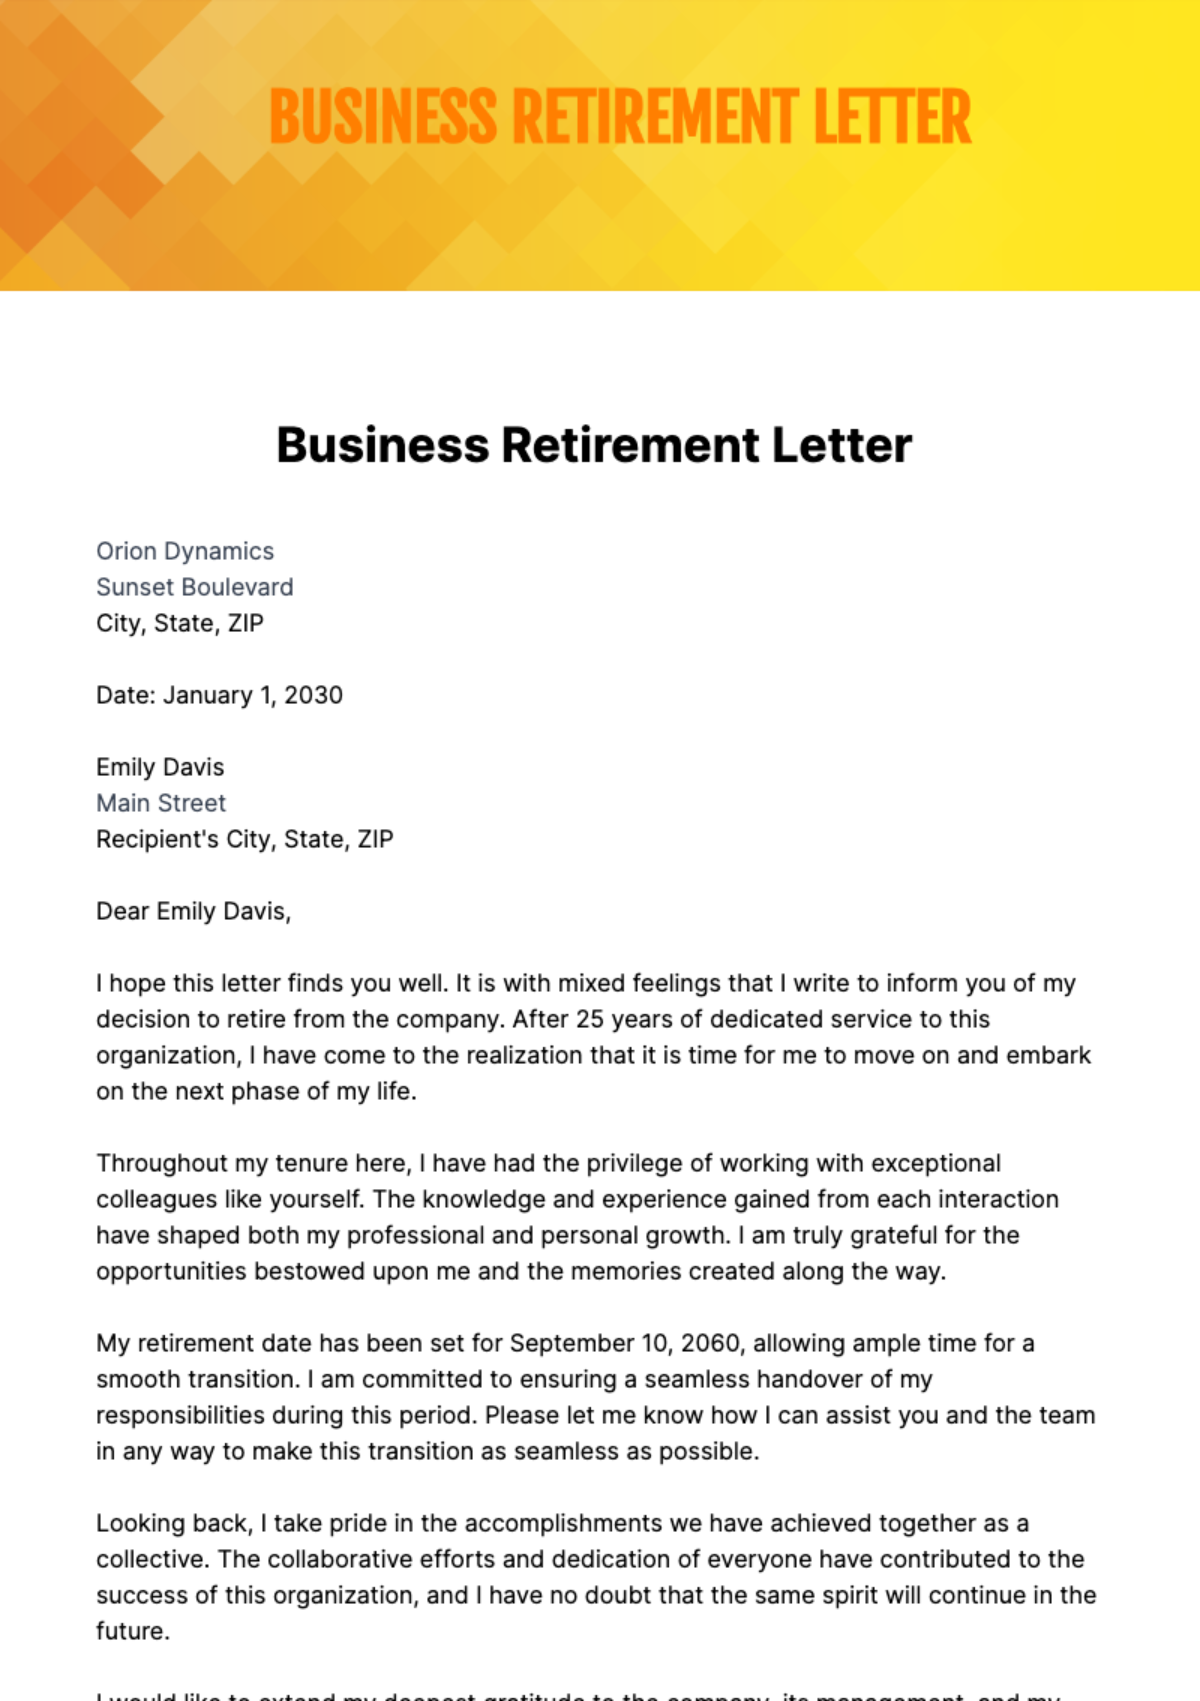 Business Retirement Letter Template